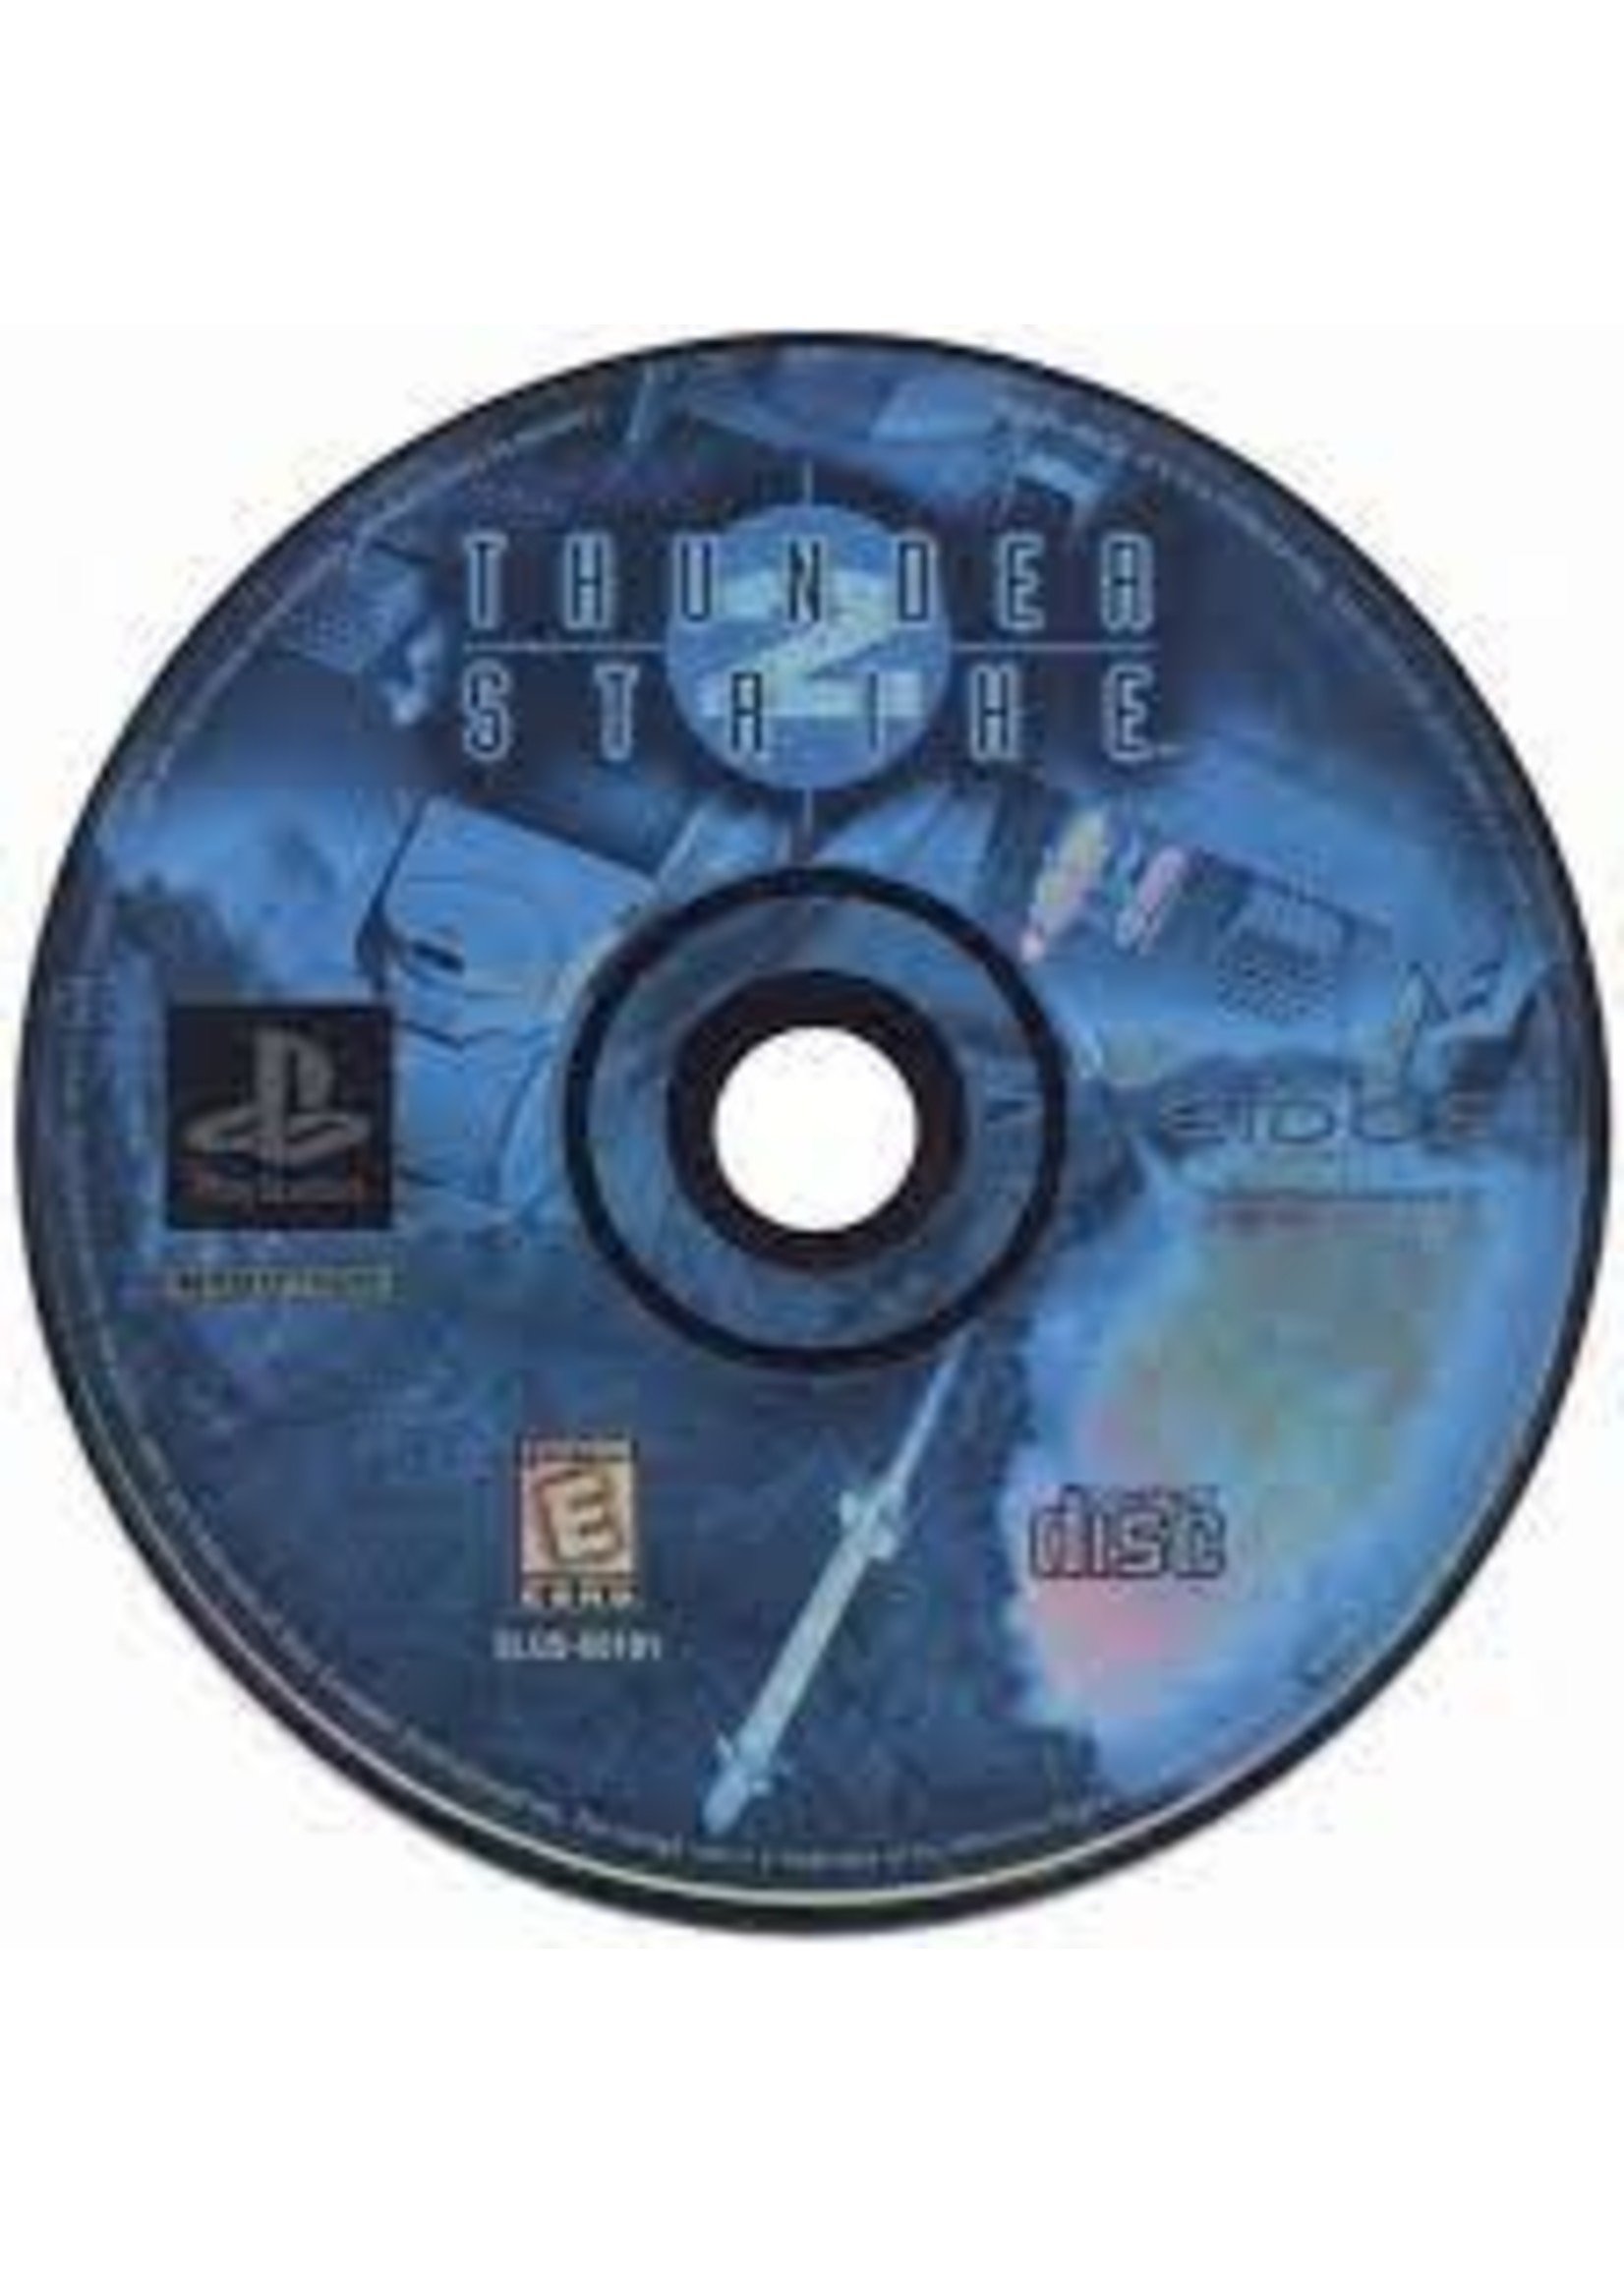 Sony Playstation 1 (PS1) Thunderstrike 2 - Print